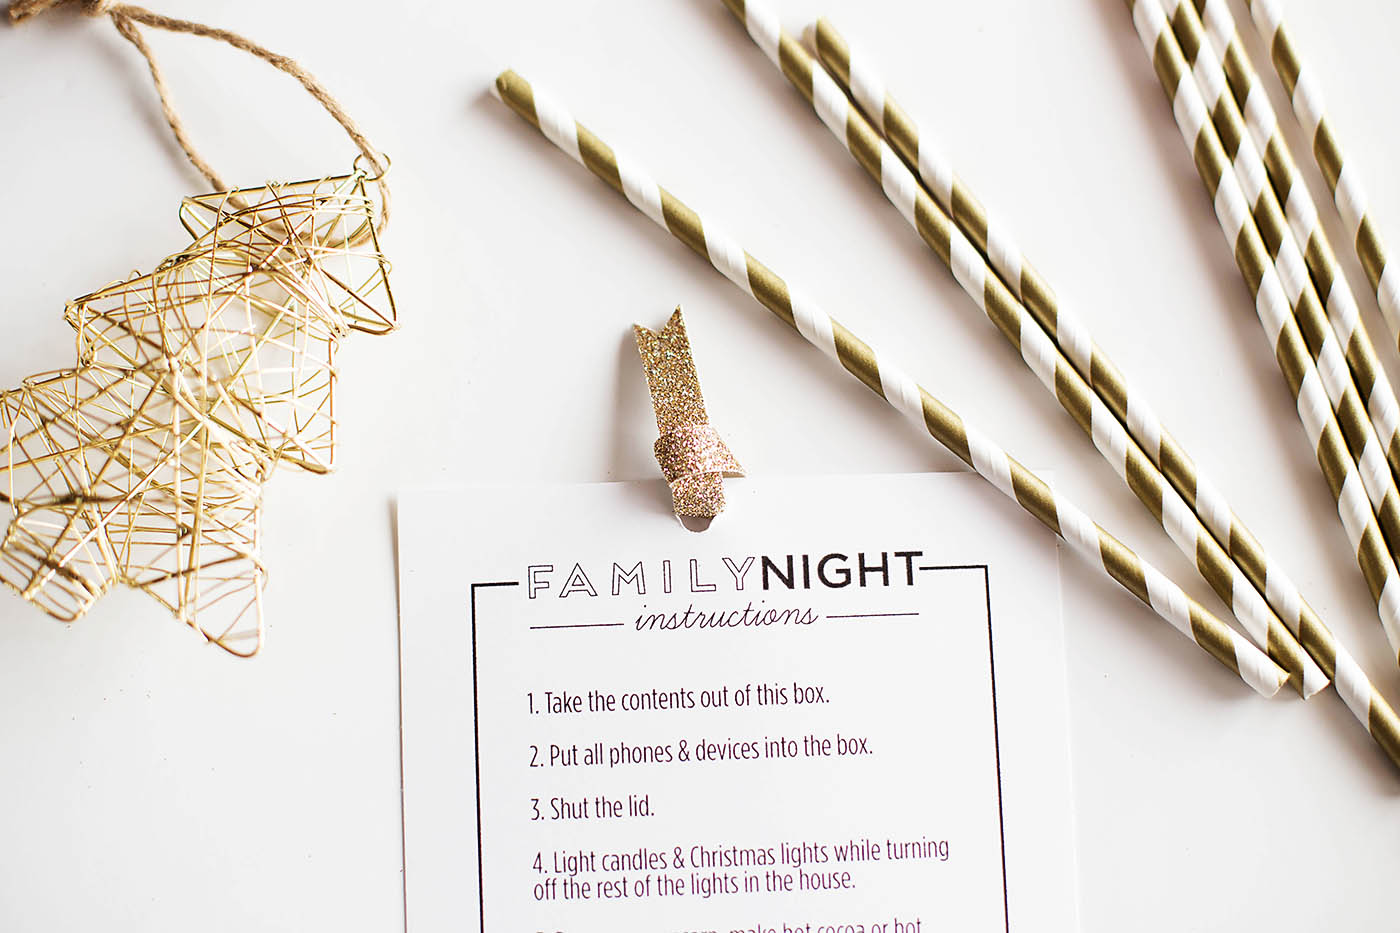 Fun family night gift box idea with free printables!